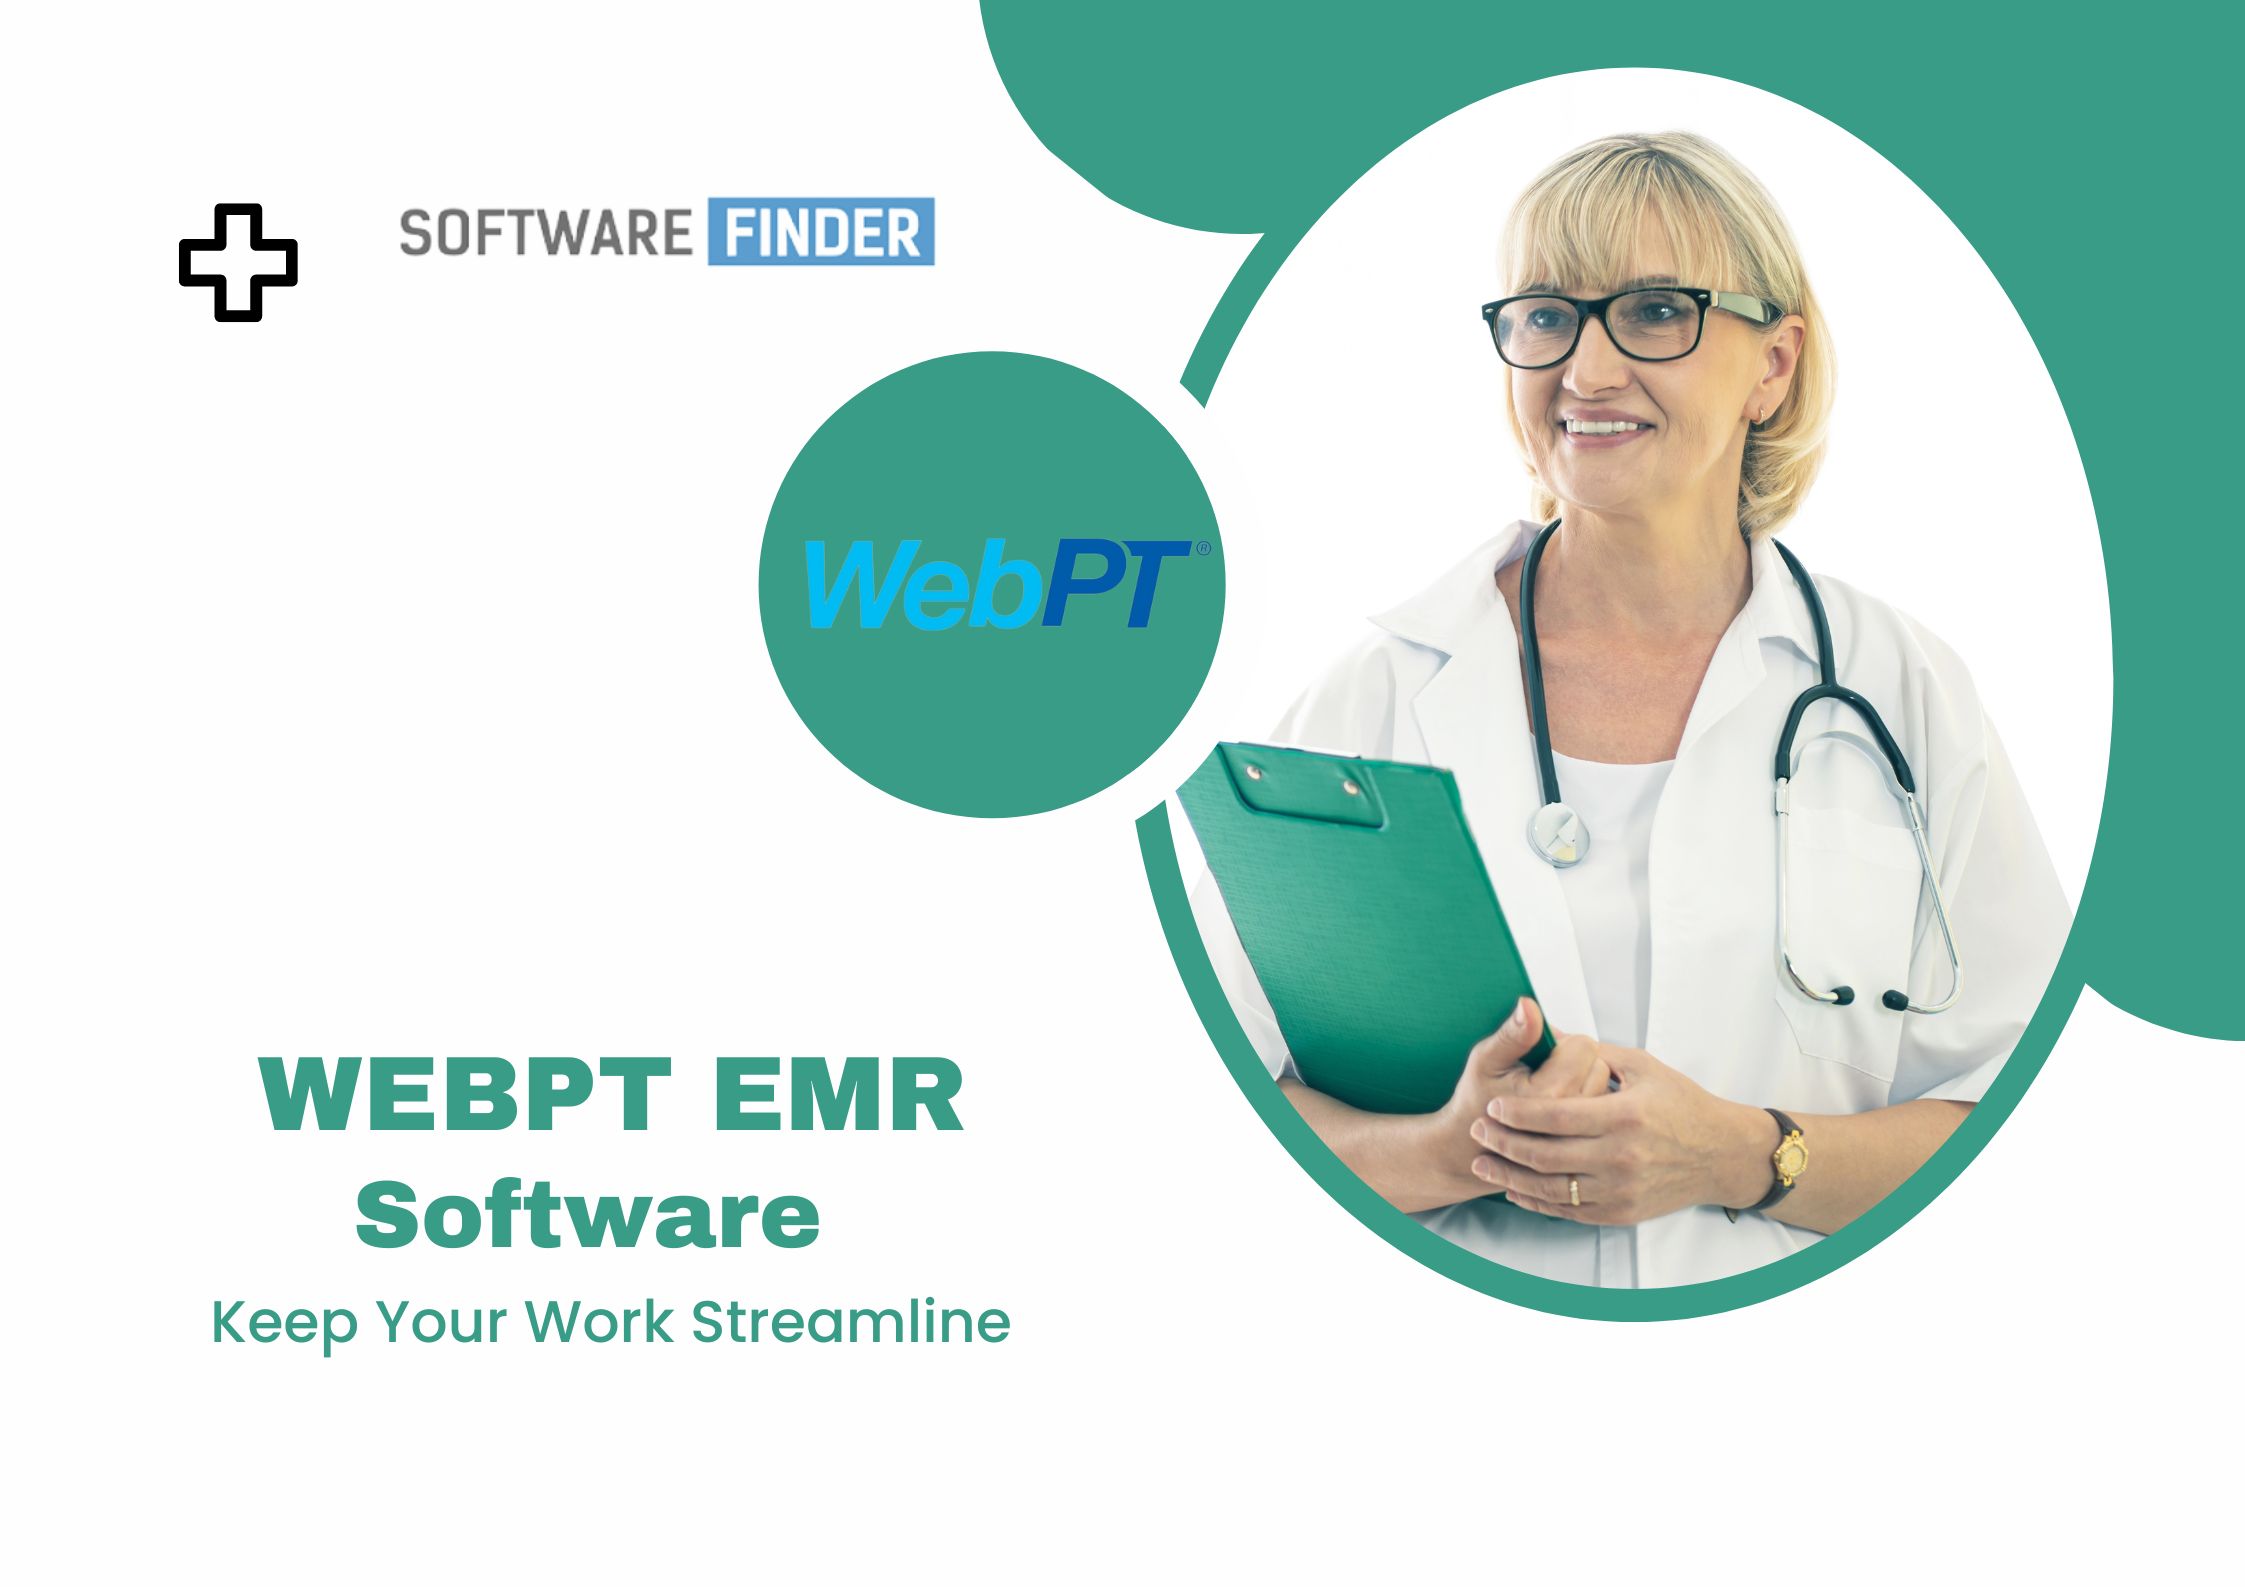 WebPT EMR Software: Streamline Your Practice with Efficiency